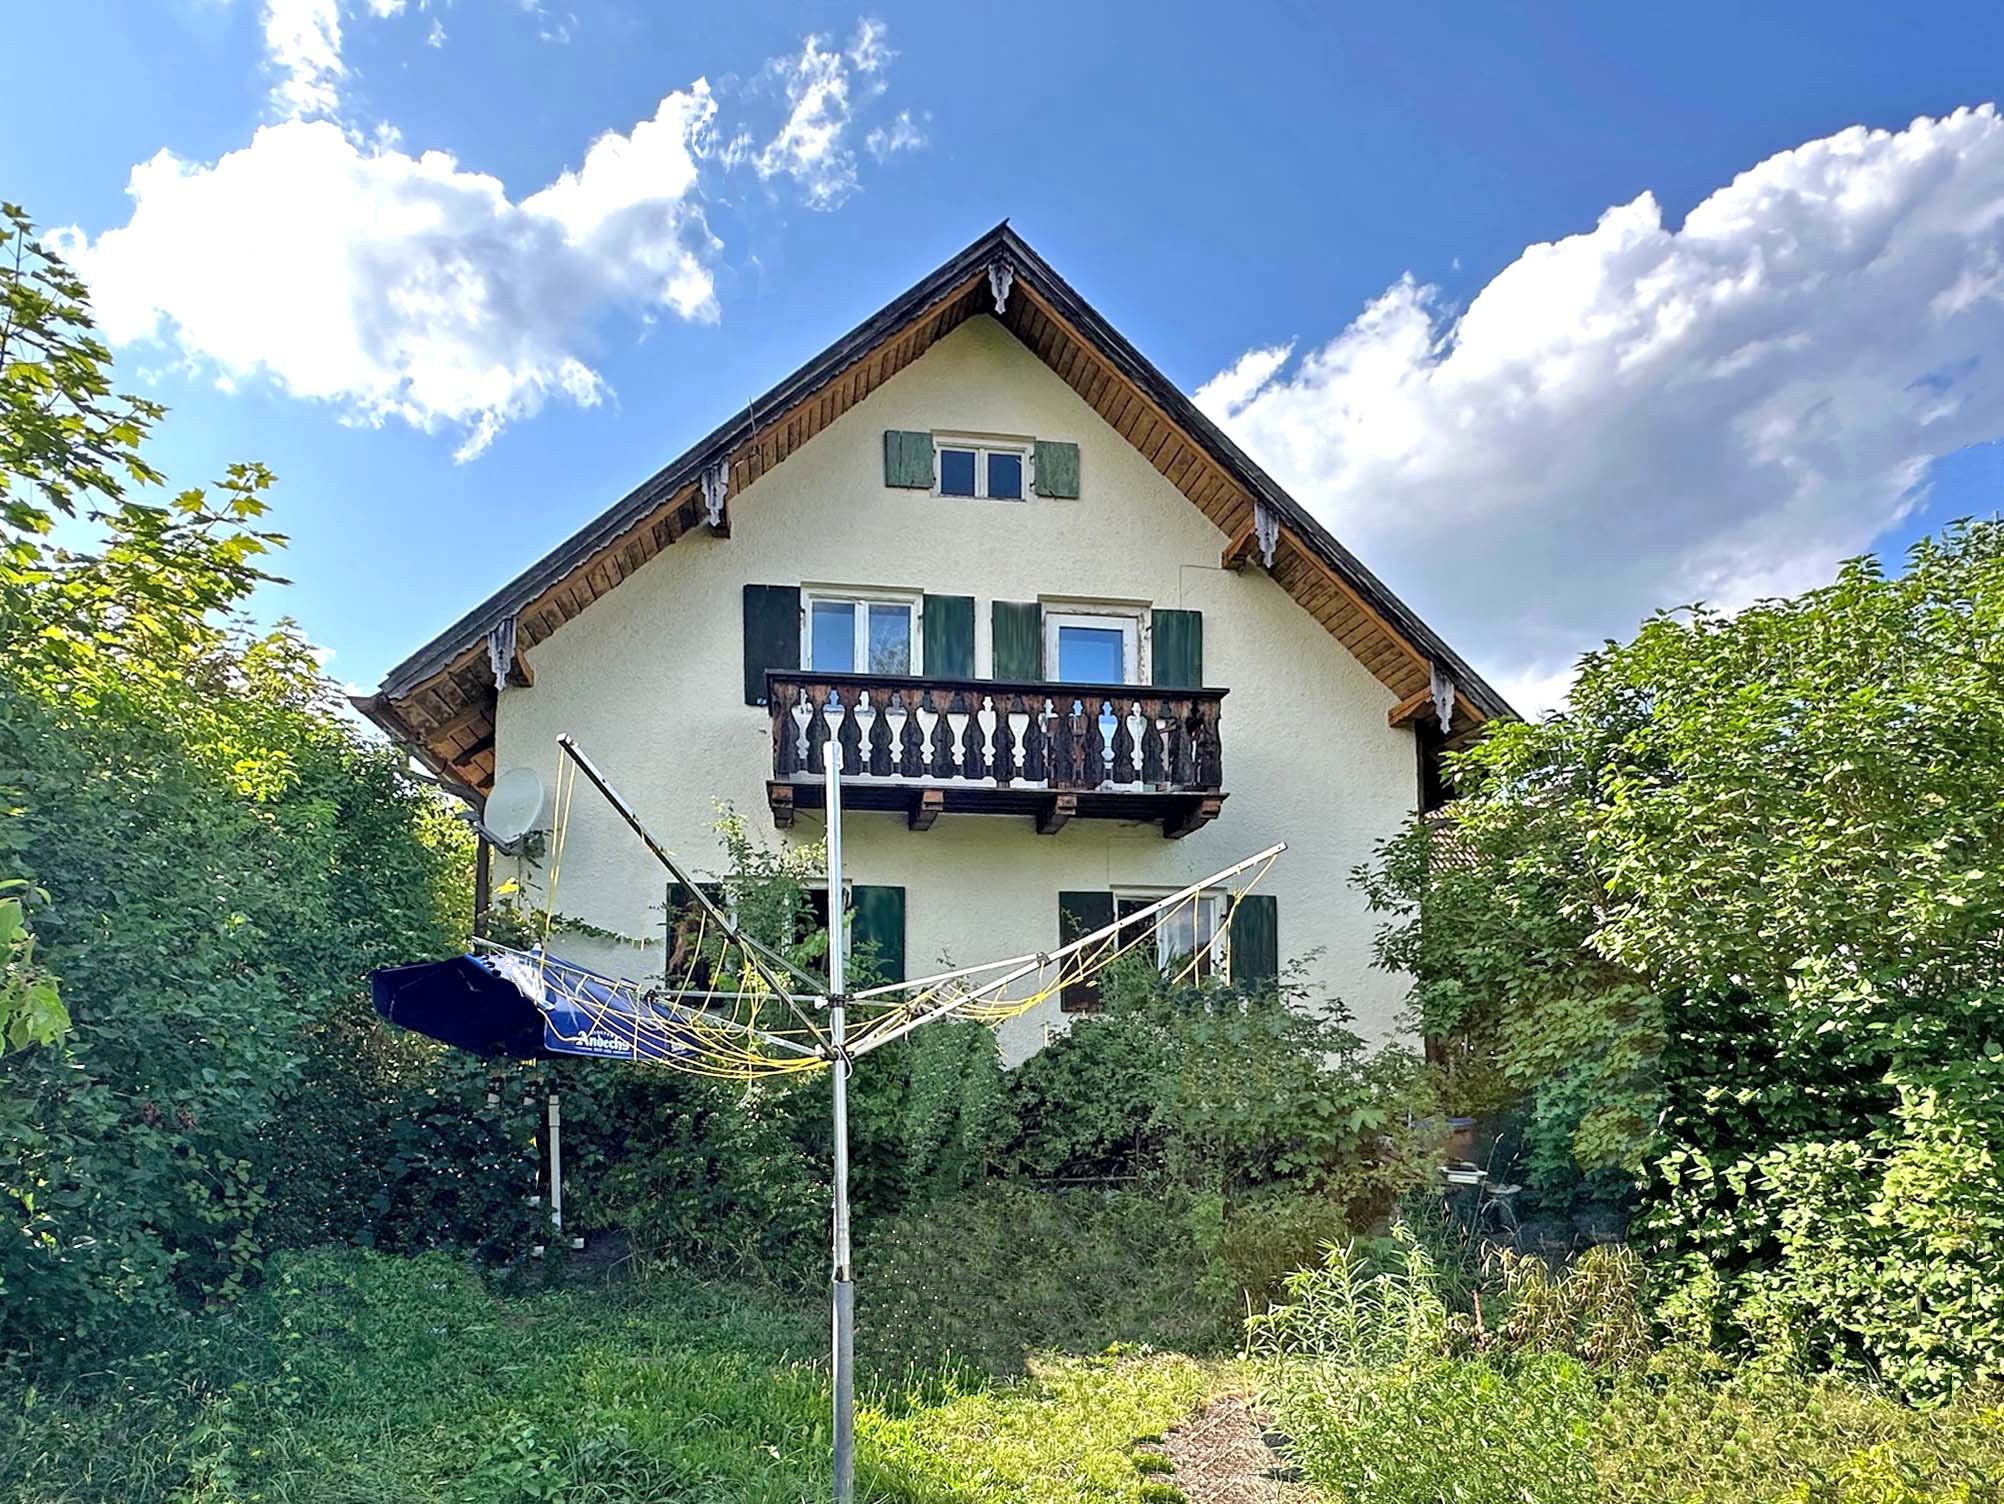 Grundstück zum Kauf 795.000 € 680 m² Grundstück Walchstadter Weg 8 Weßling Weßling 82234